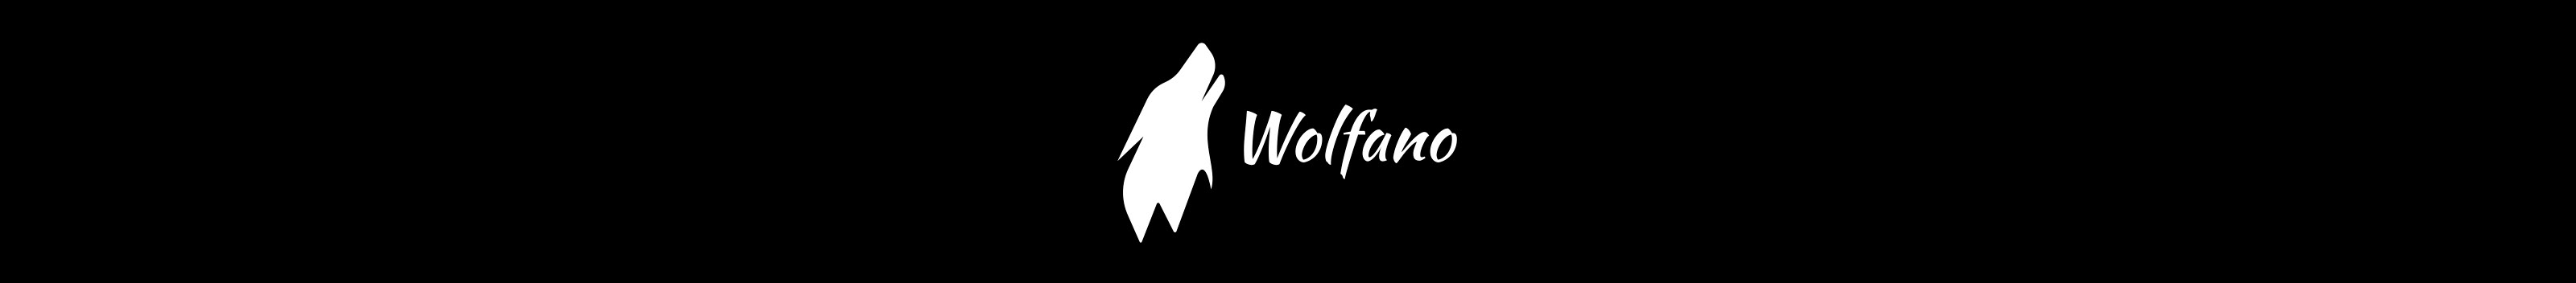 Tobby Wolfano's profile banner